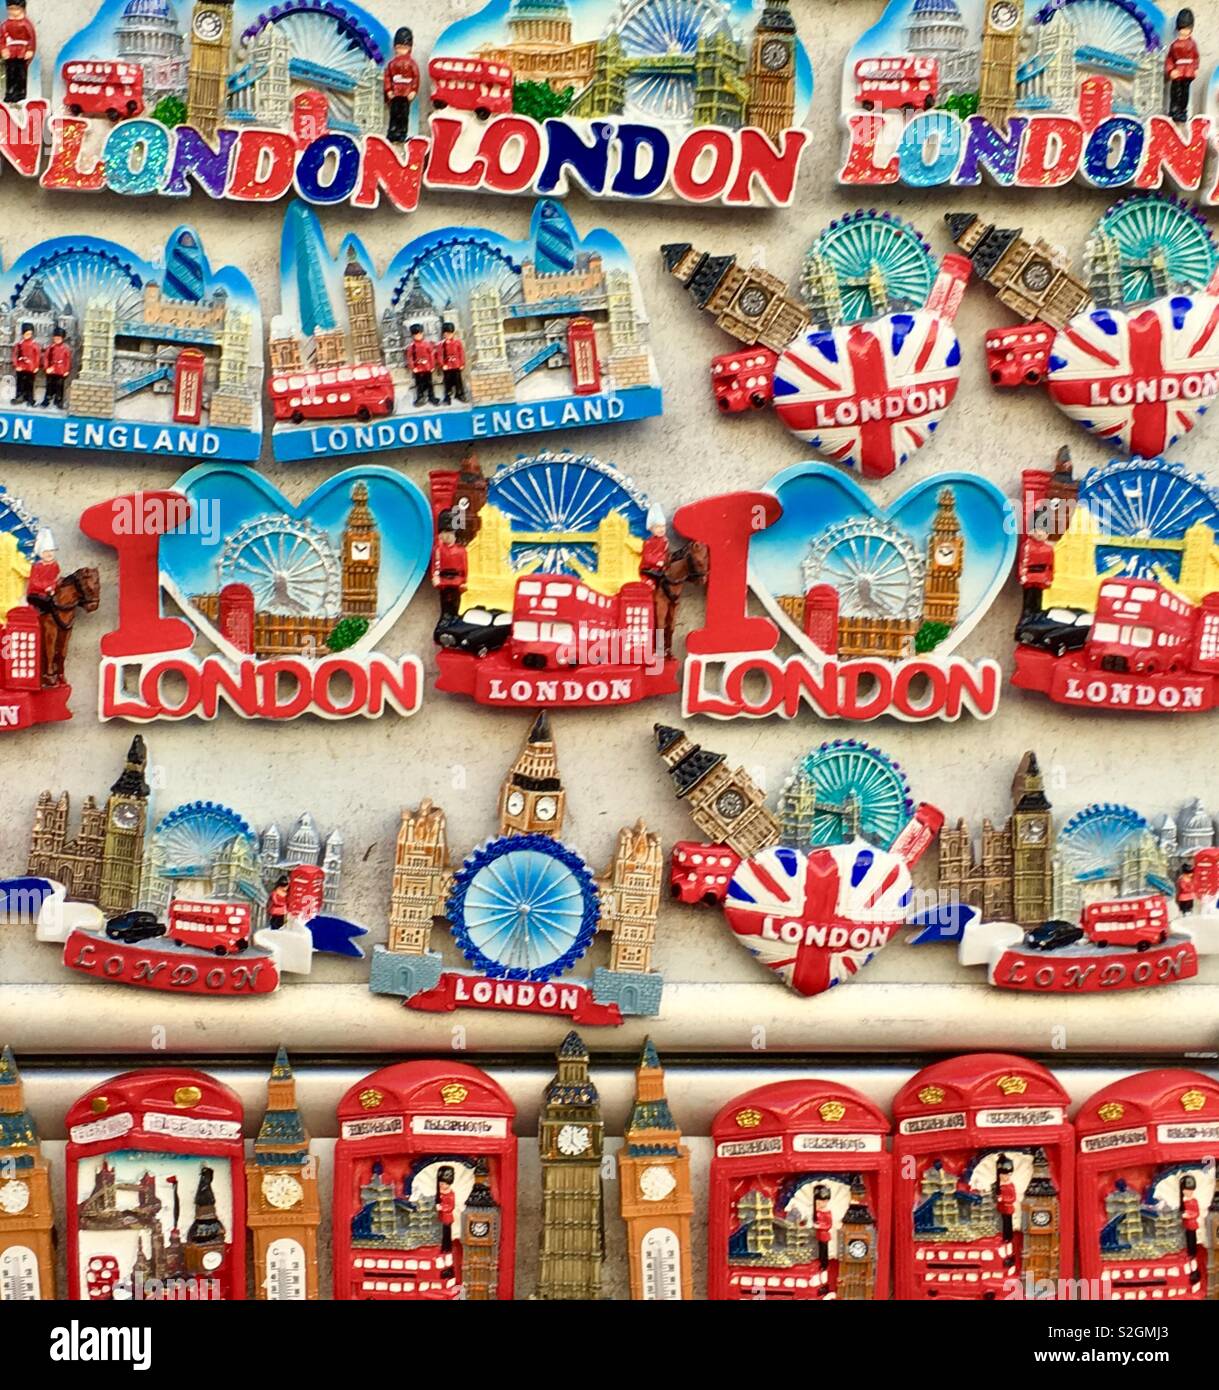 London Fridge magnets souvenirs Stock Photo - Alamy